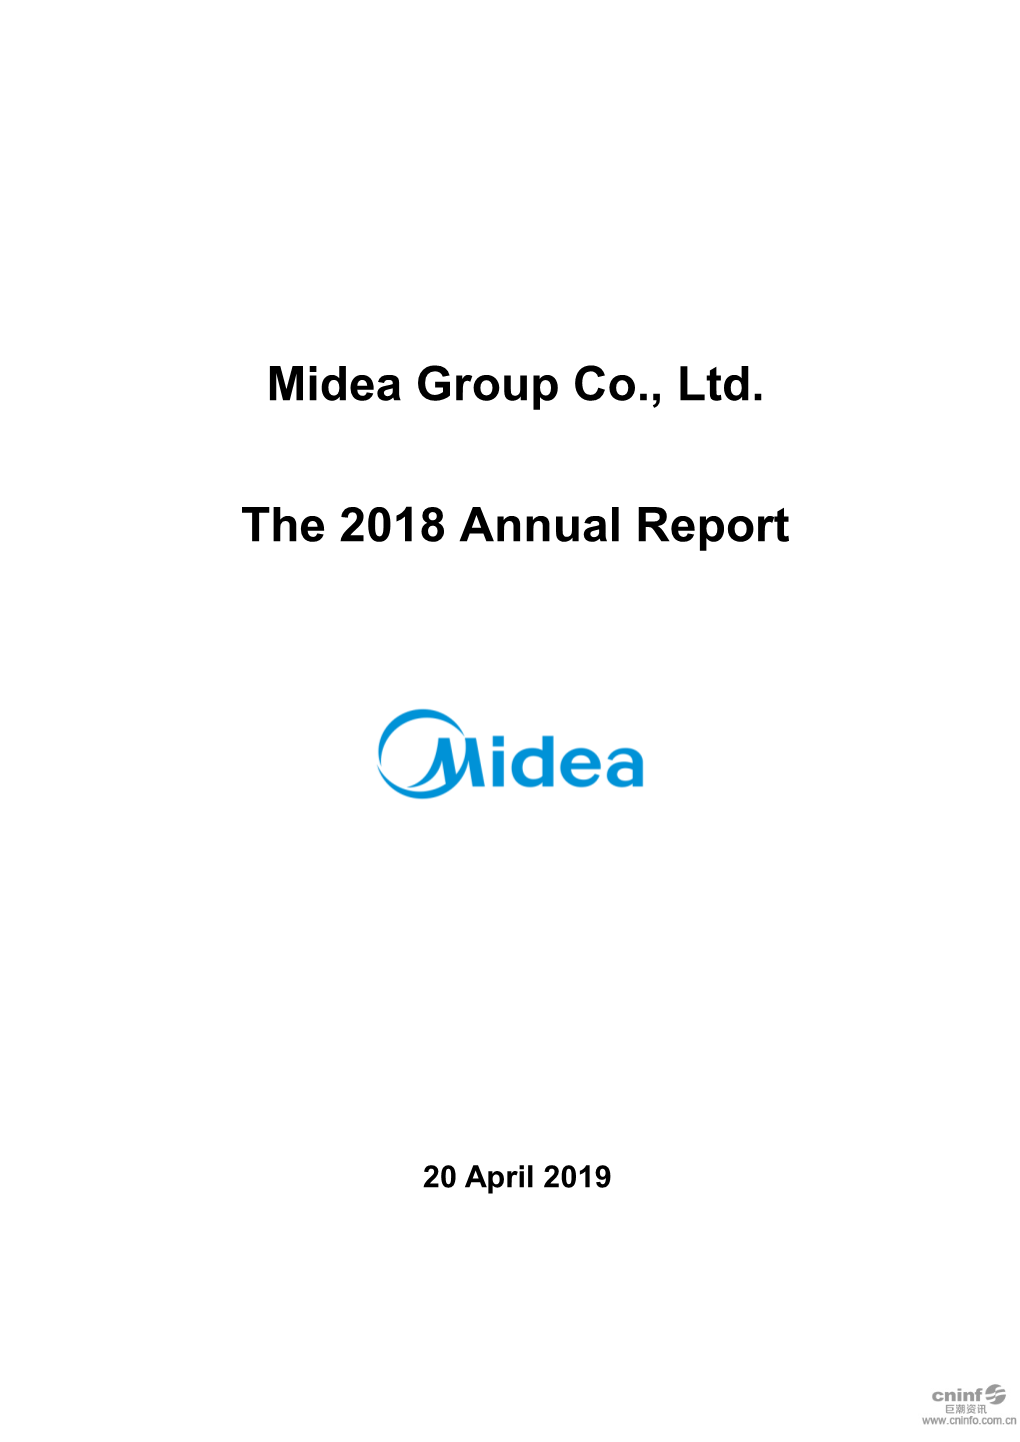 Midea Group Co., Ltd. the 2018 Annual Report